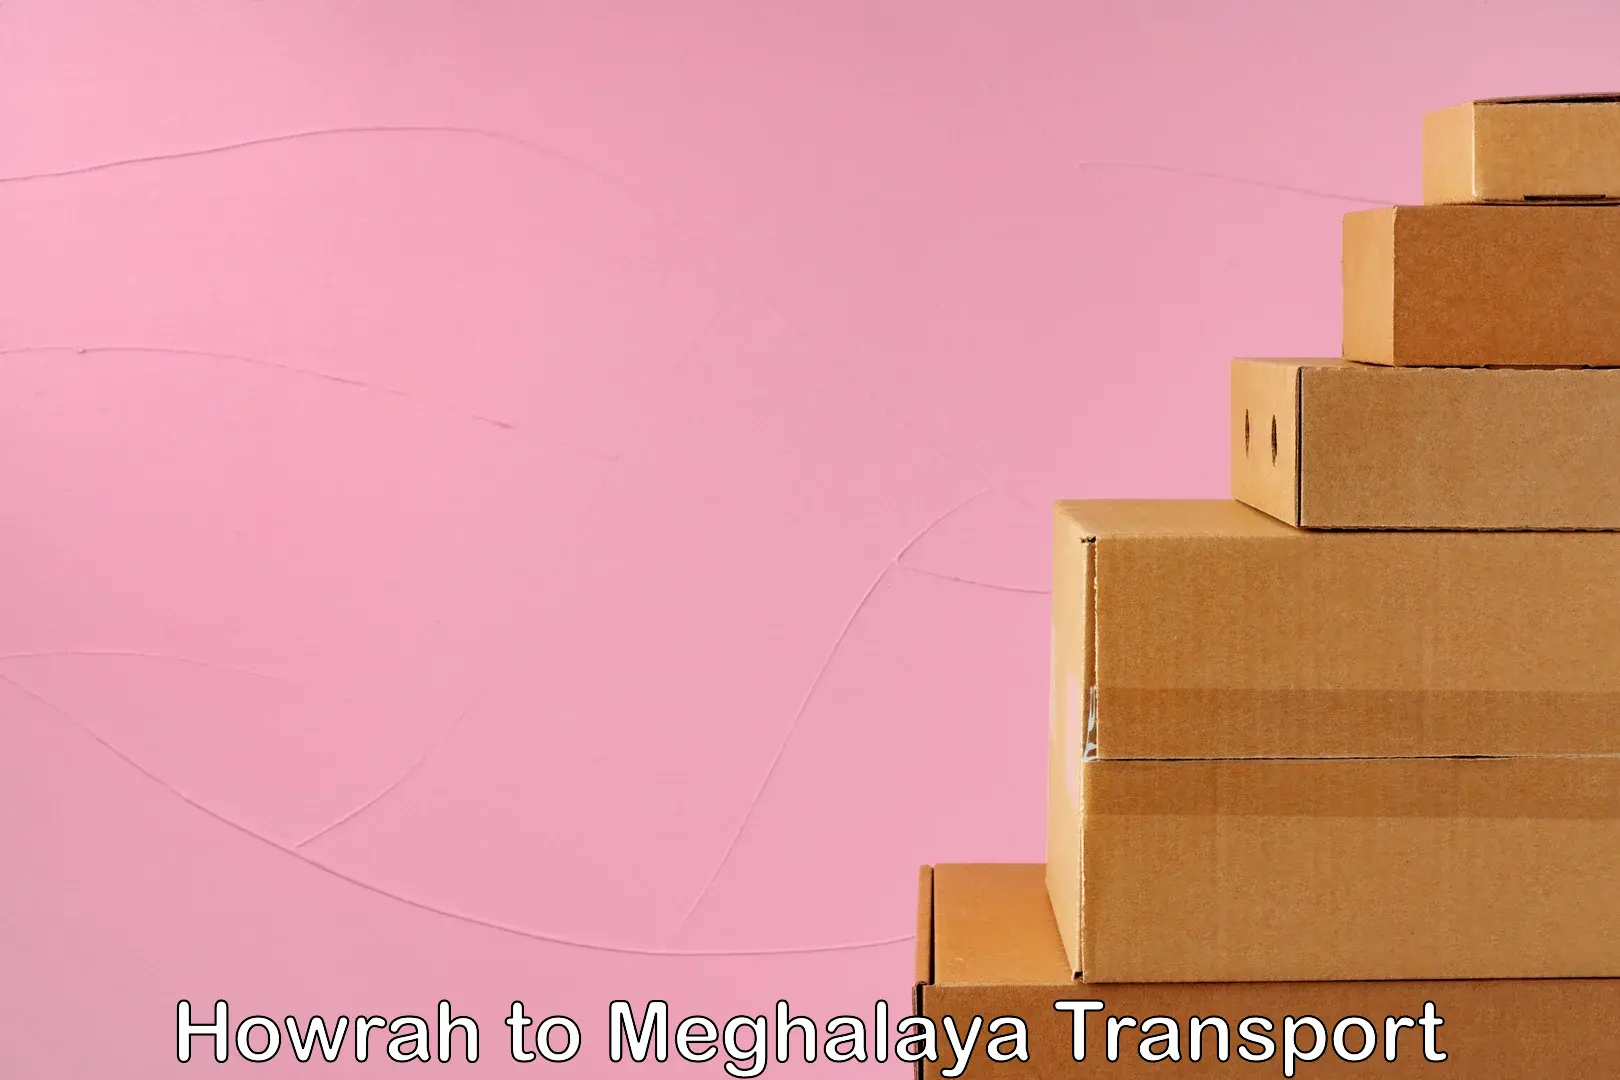 Nearest transport service Howrah to Meghalaya